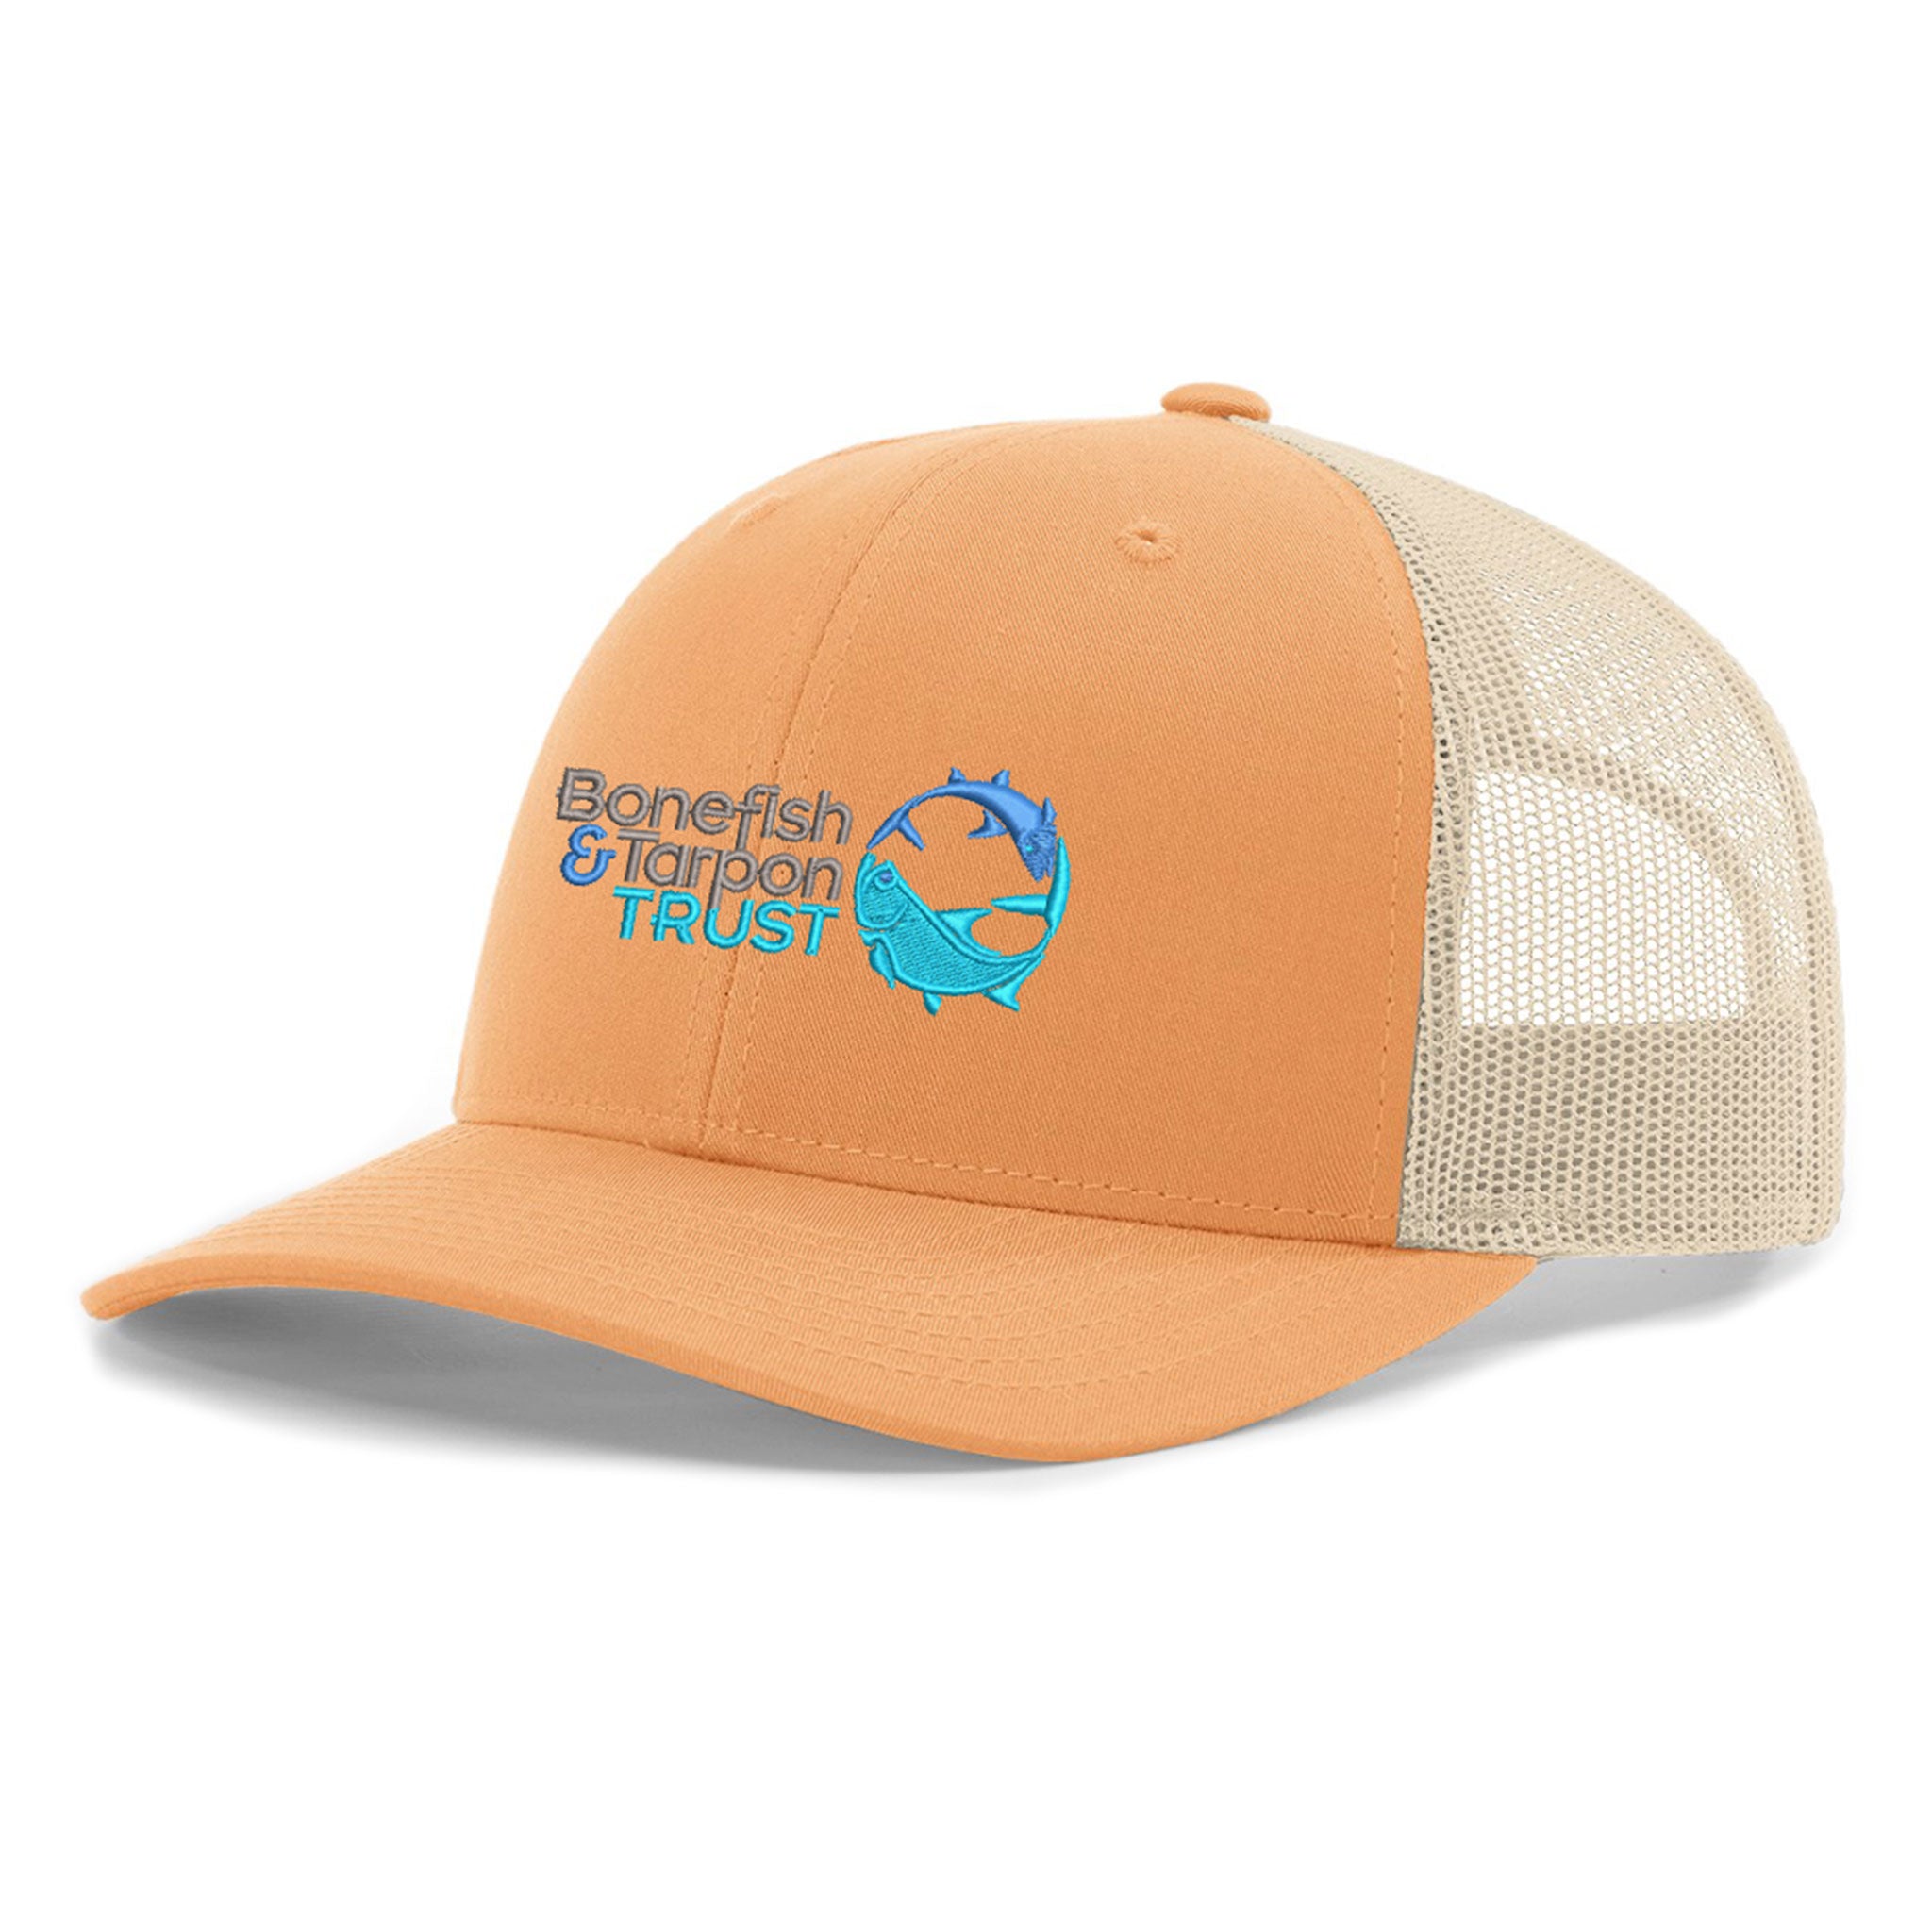 BTT Low Profile Trucker Cap - Peach/Birch